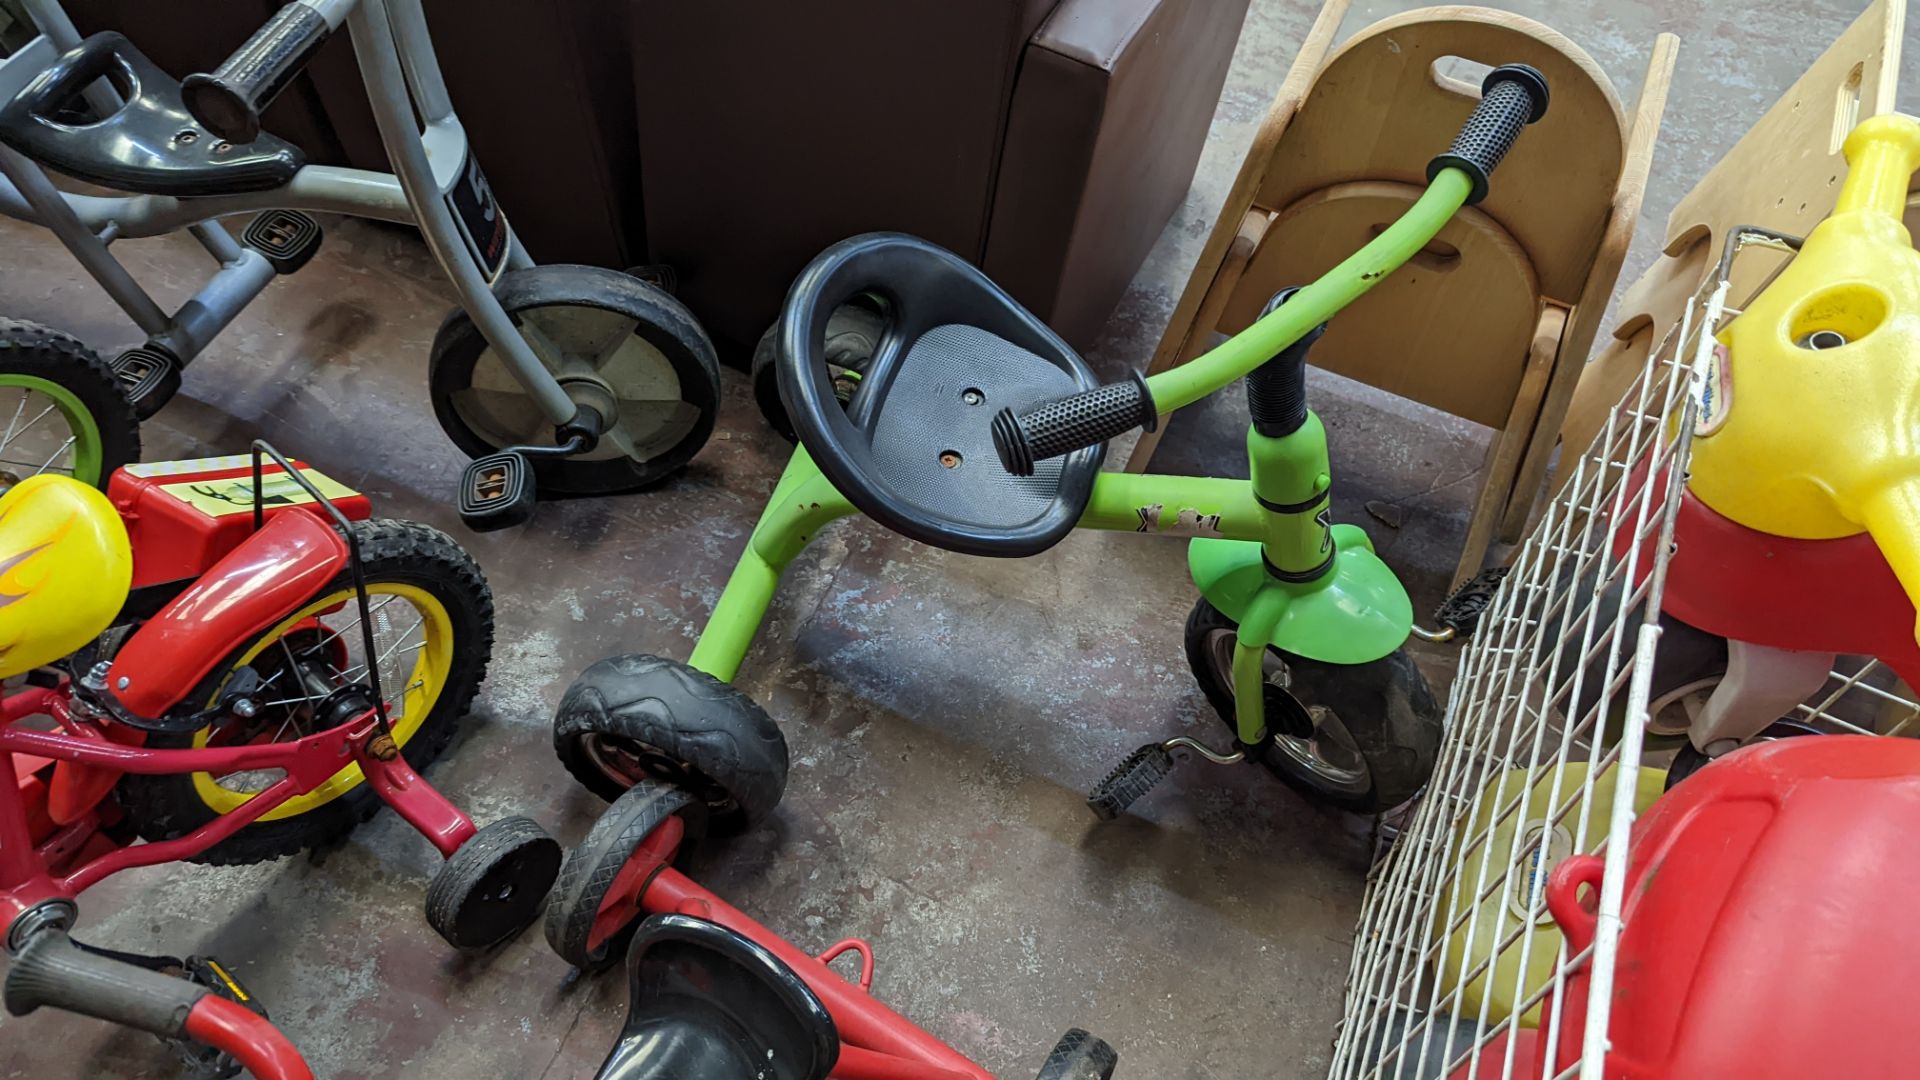 5 off children's 3-wheel bikes, including one tandem bike - Image 11 of 12